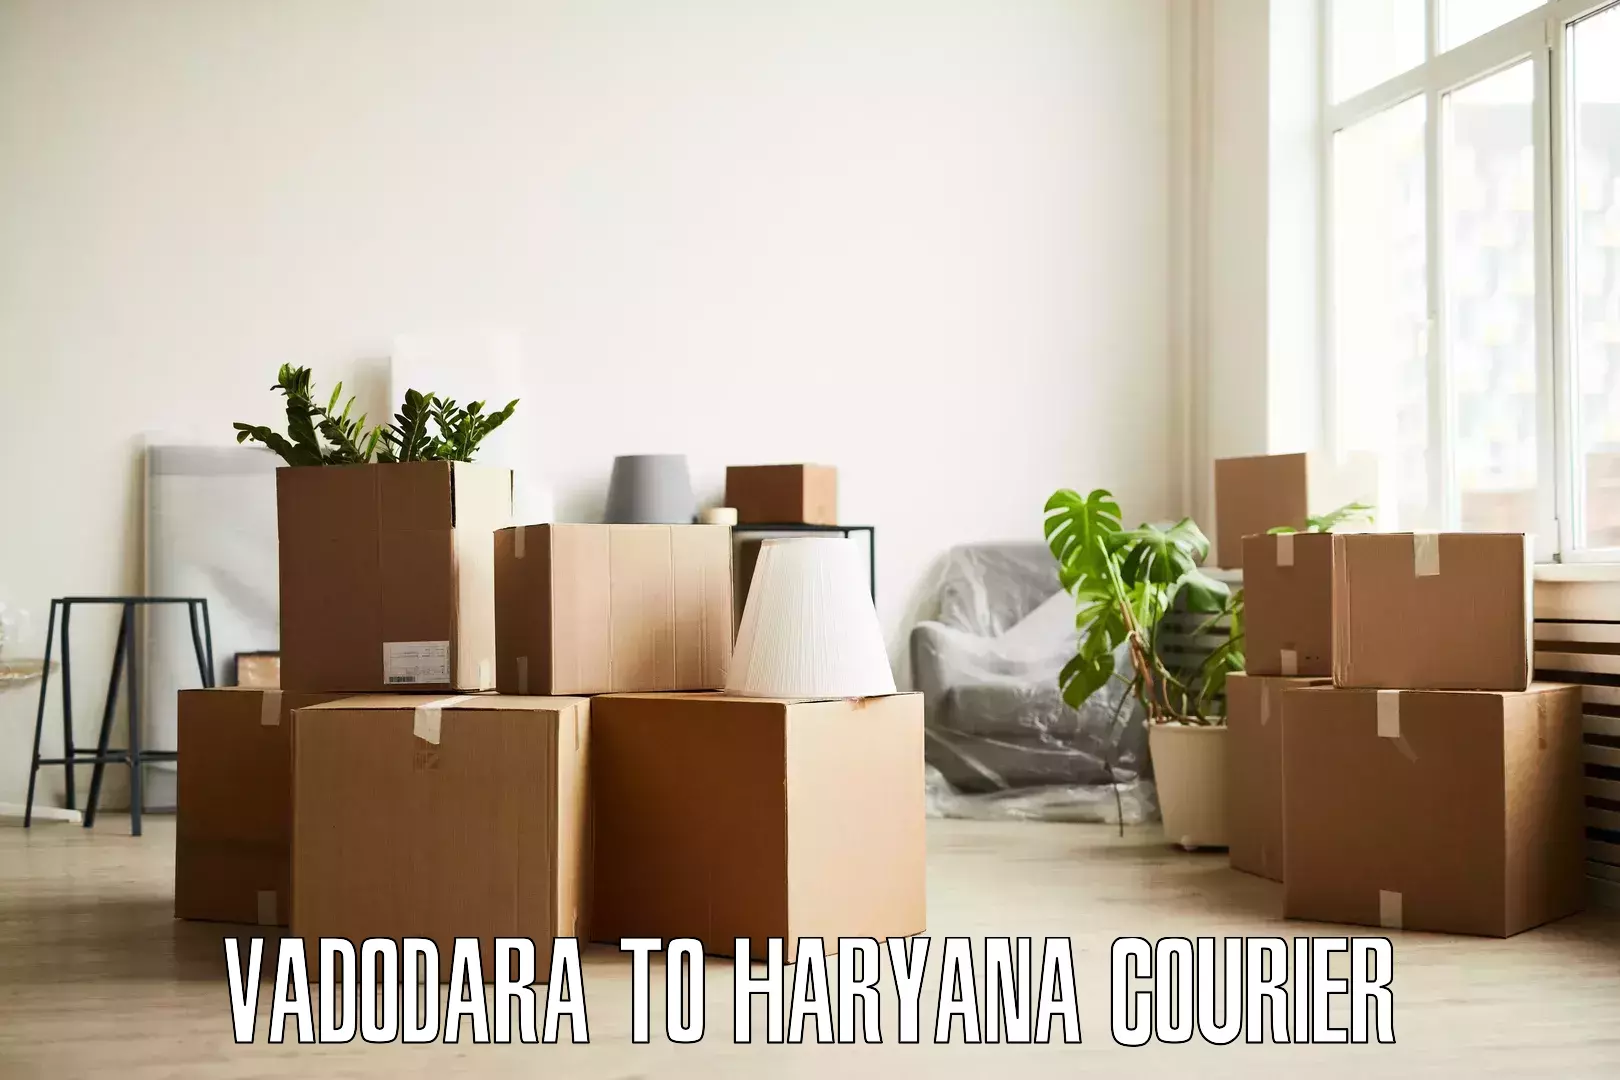 Professional movers and packers Vadodara to Gurugram